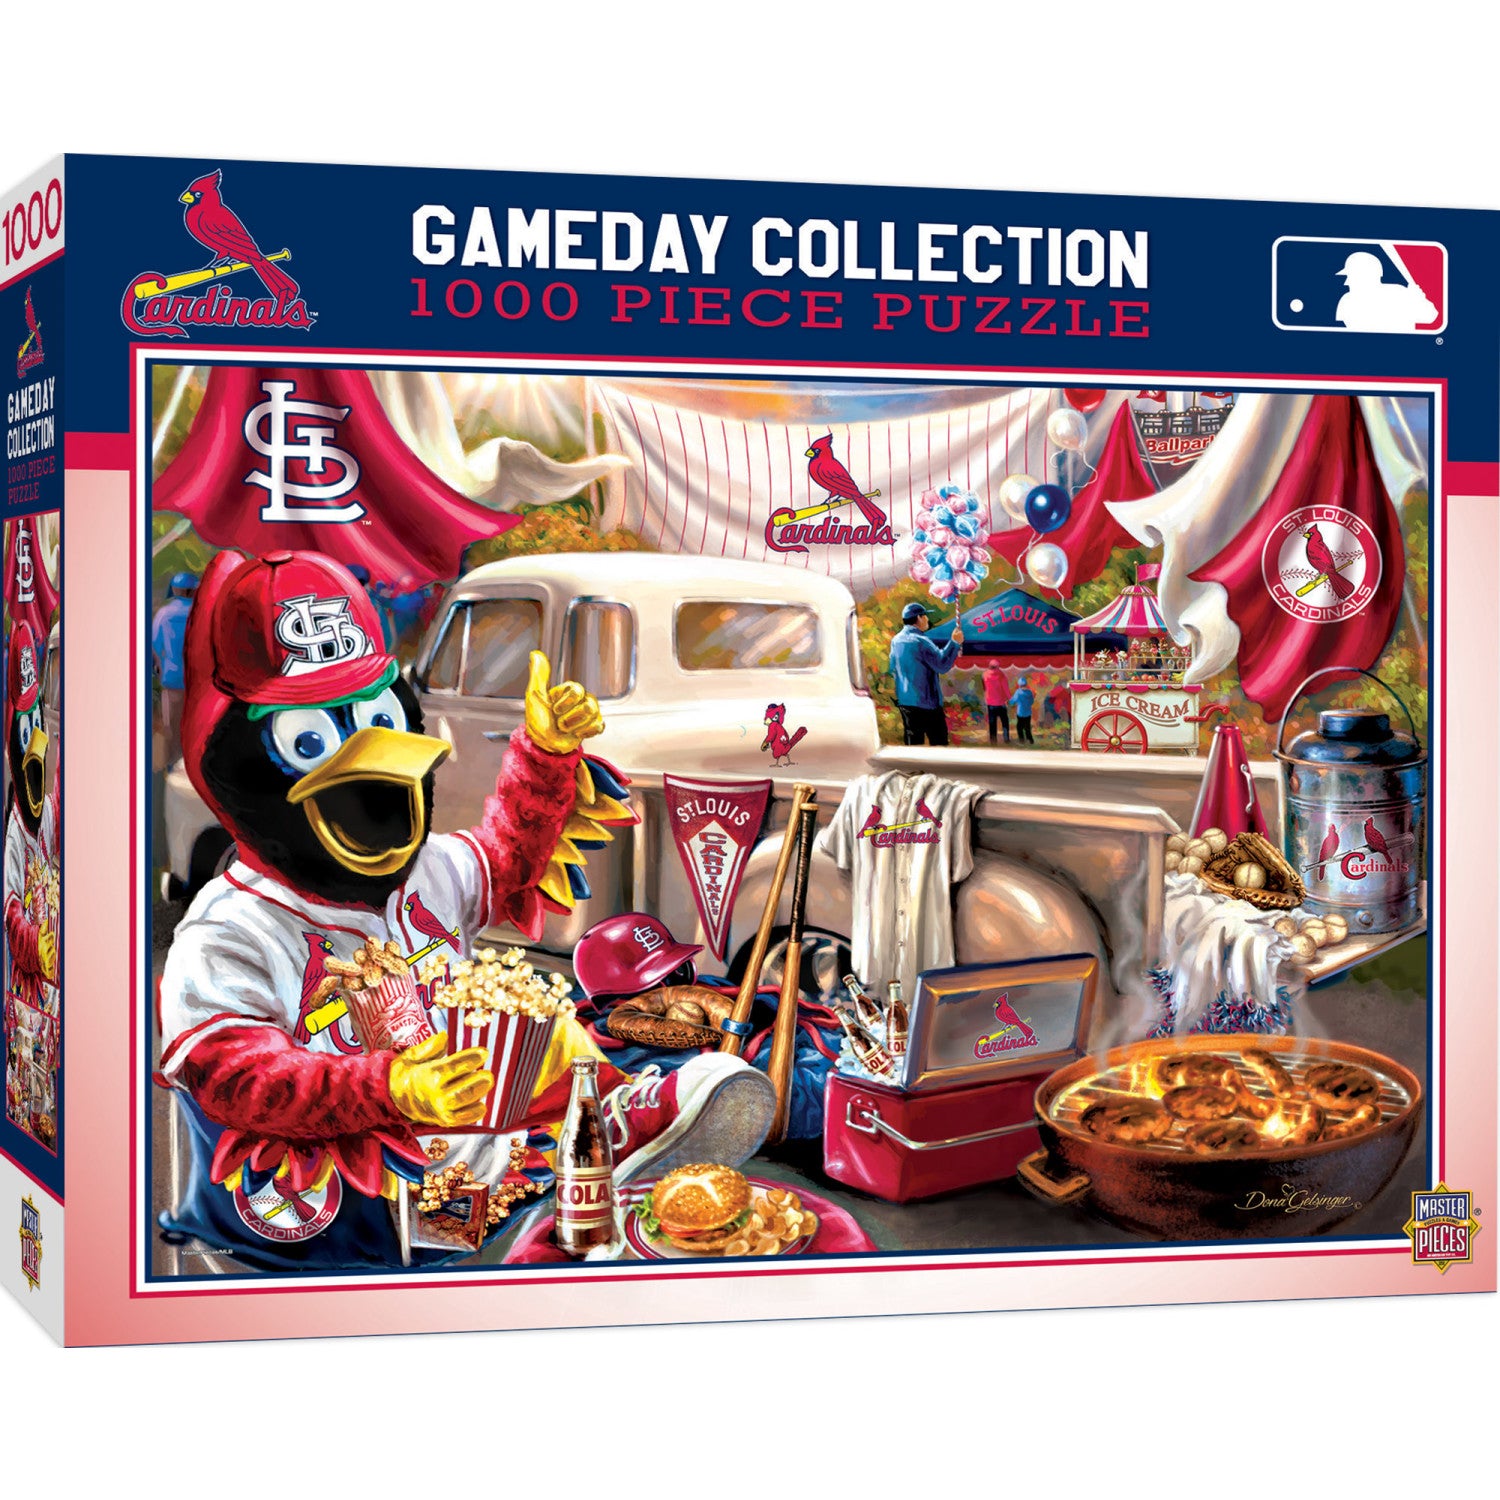 MLB St. Louis Cardinals 5-Piece Baby Gift Set